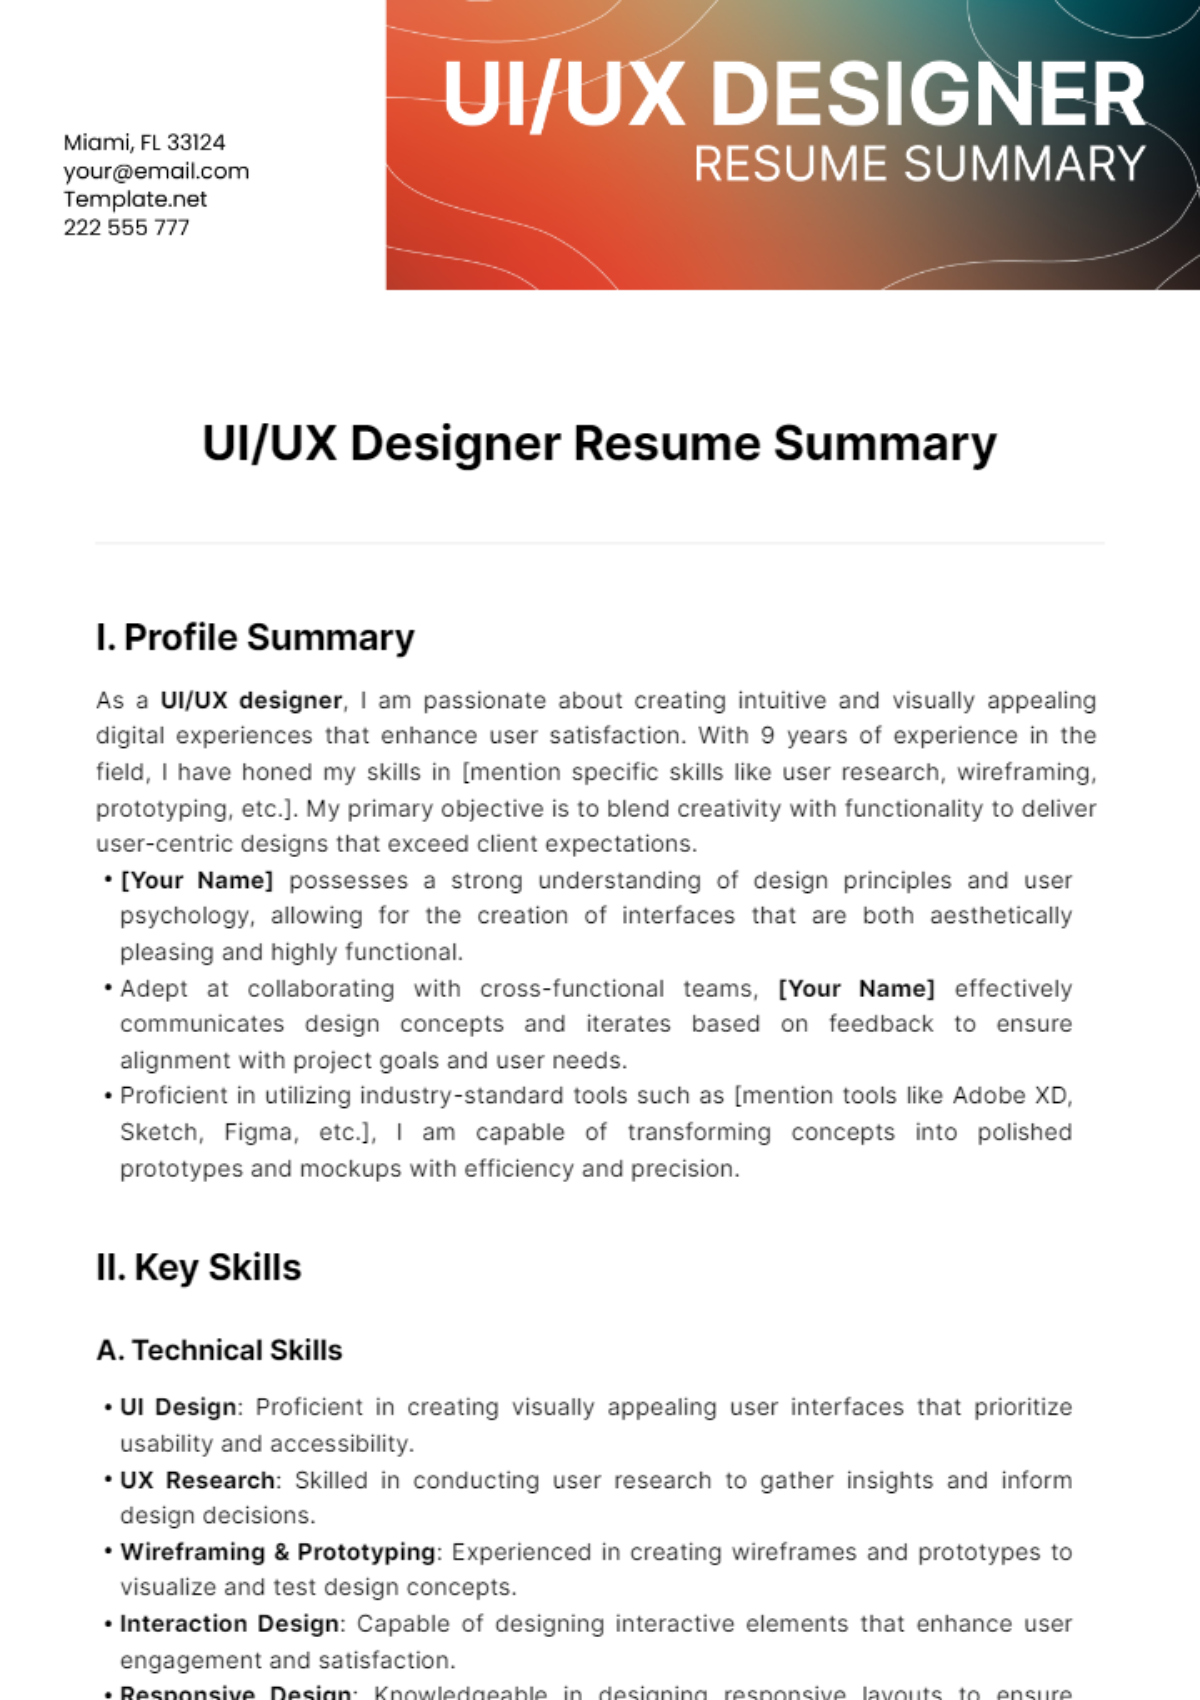 UI/UX Designer Resume Summary Template